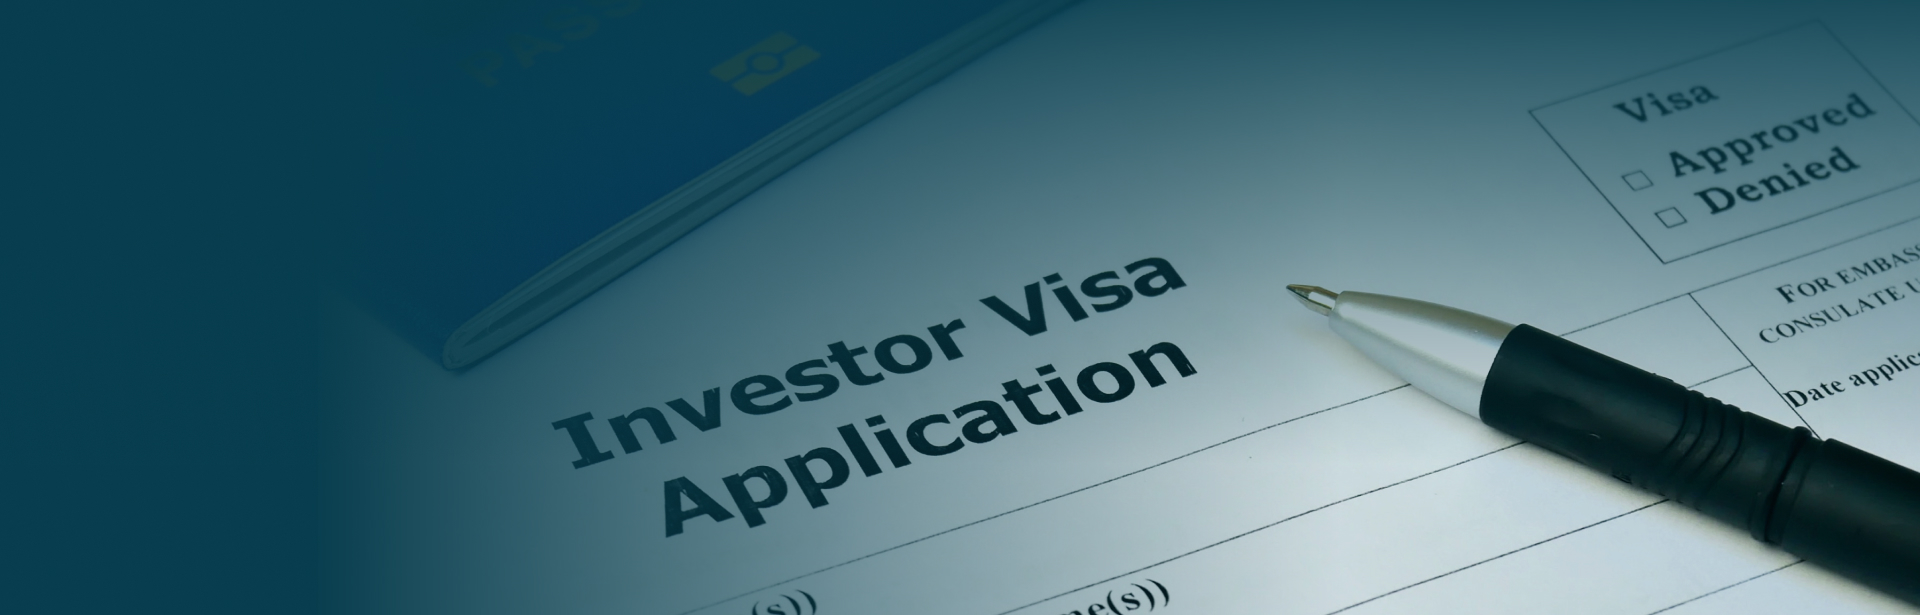 Investor Visa Application Document